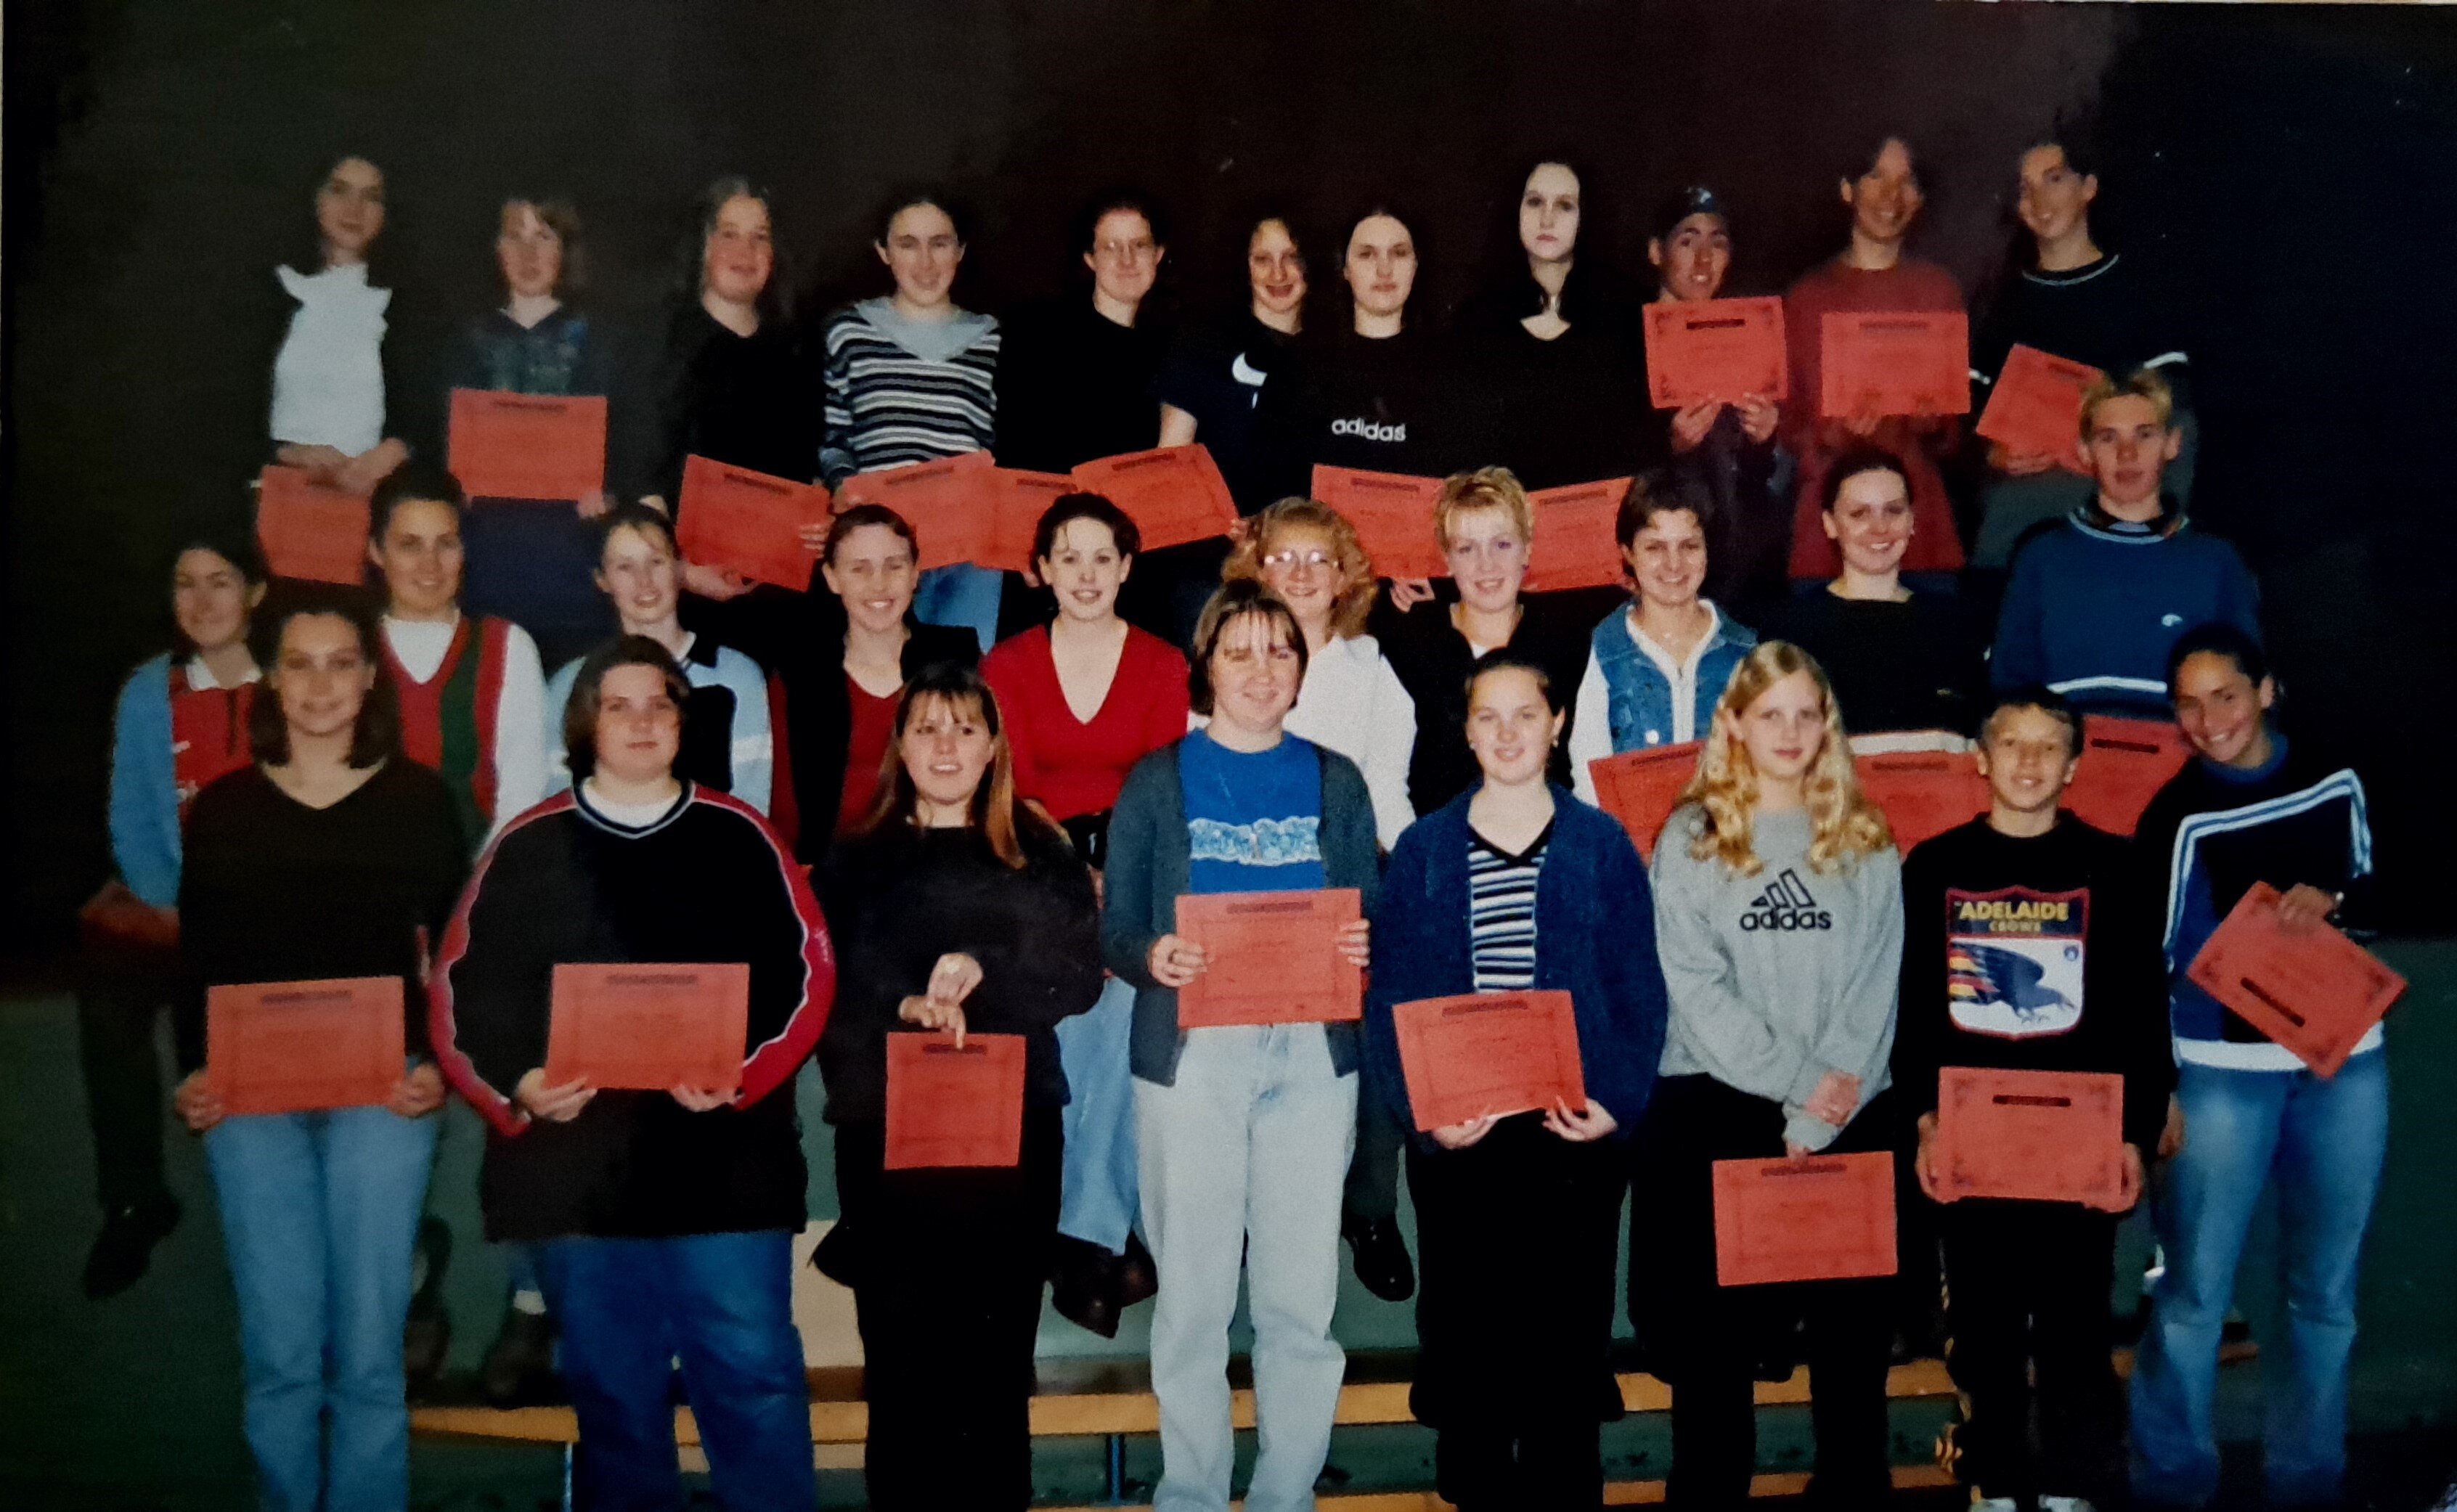 Nuriootpa High School Class of 2001| 20 Year Reunion  (1997-2001)